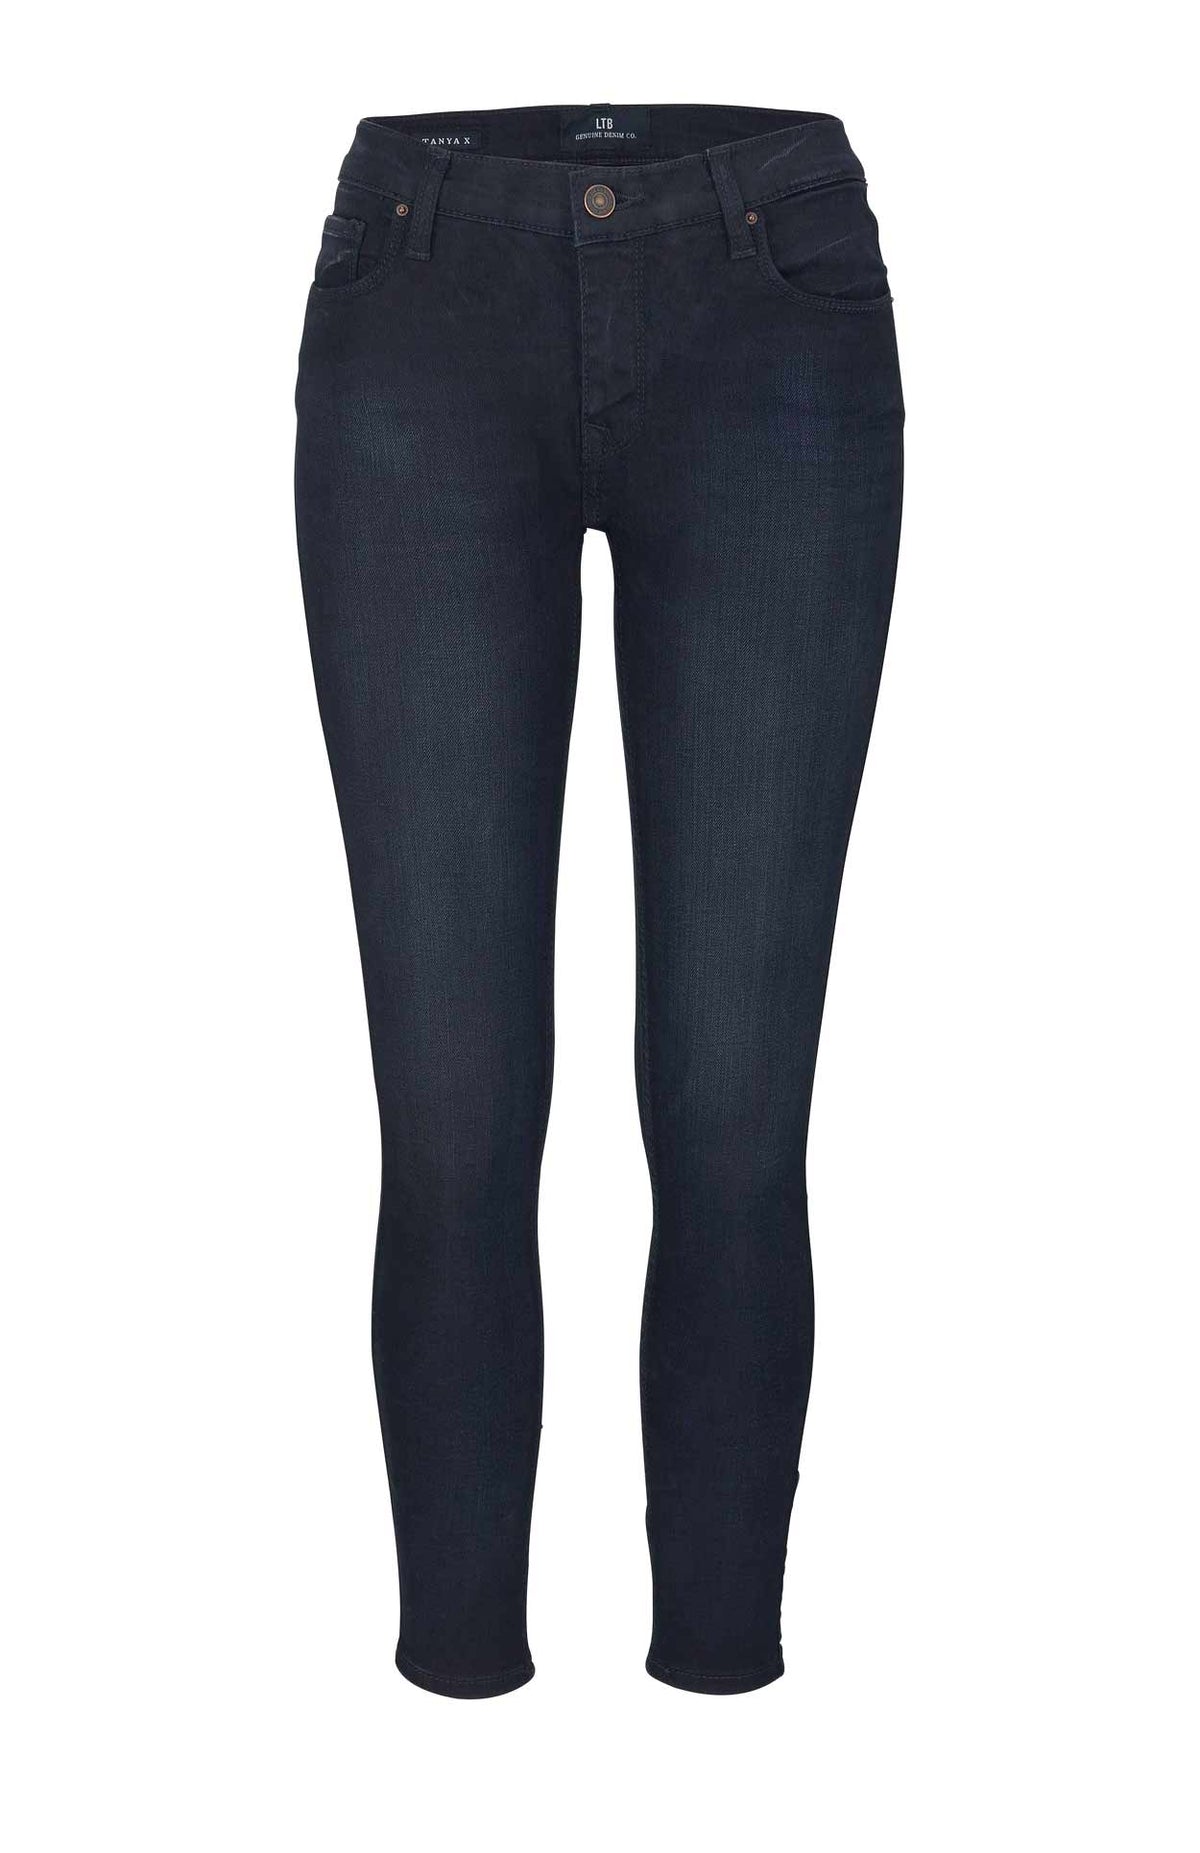 LTB Damen Marken-Superskinny-Jeans TANJA X", dunkelblau"